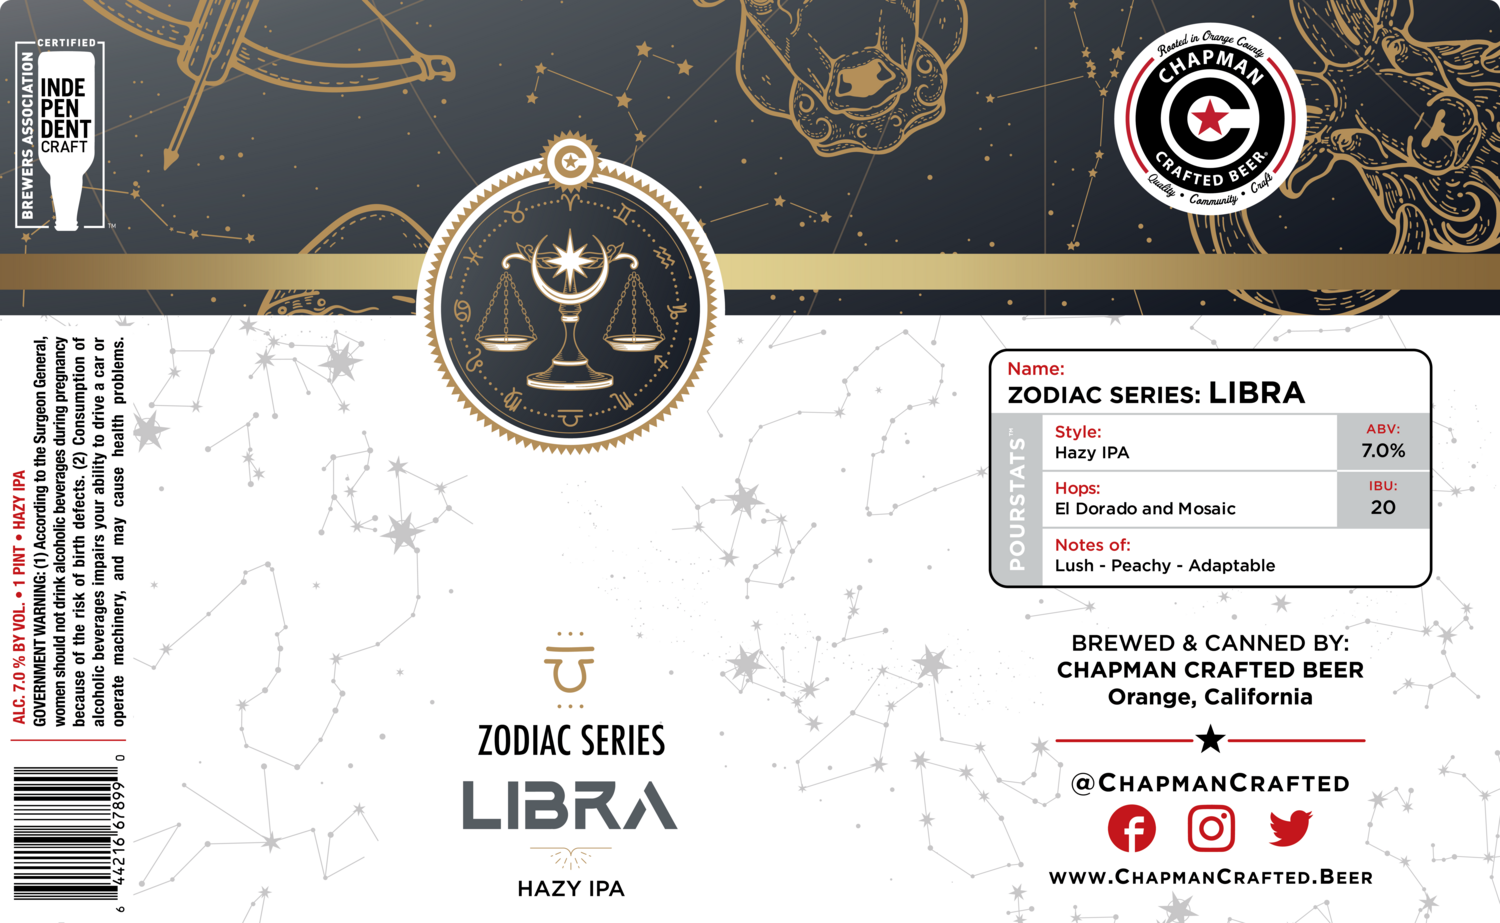 Zodiac Series: Libra Full Case (24 x 16oz cans)